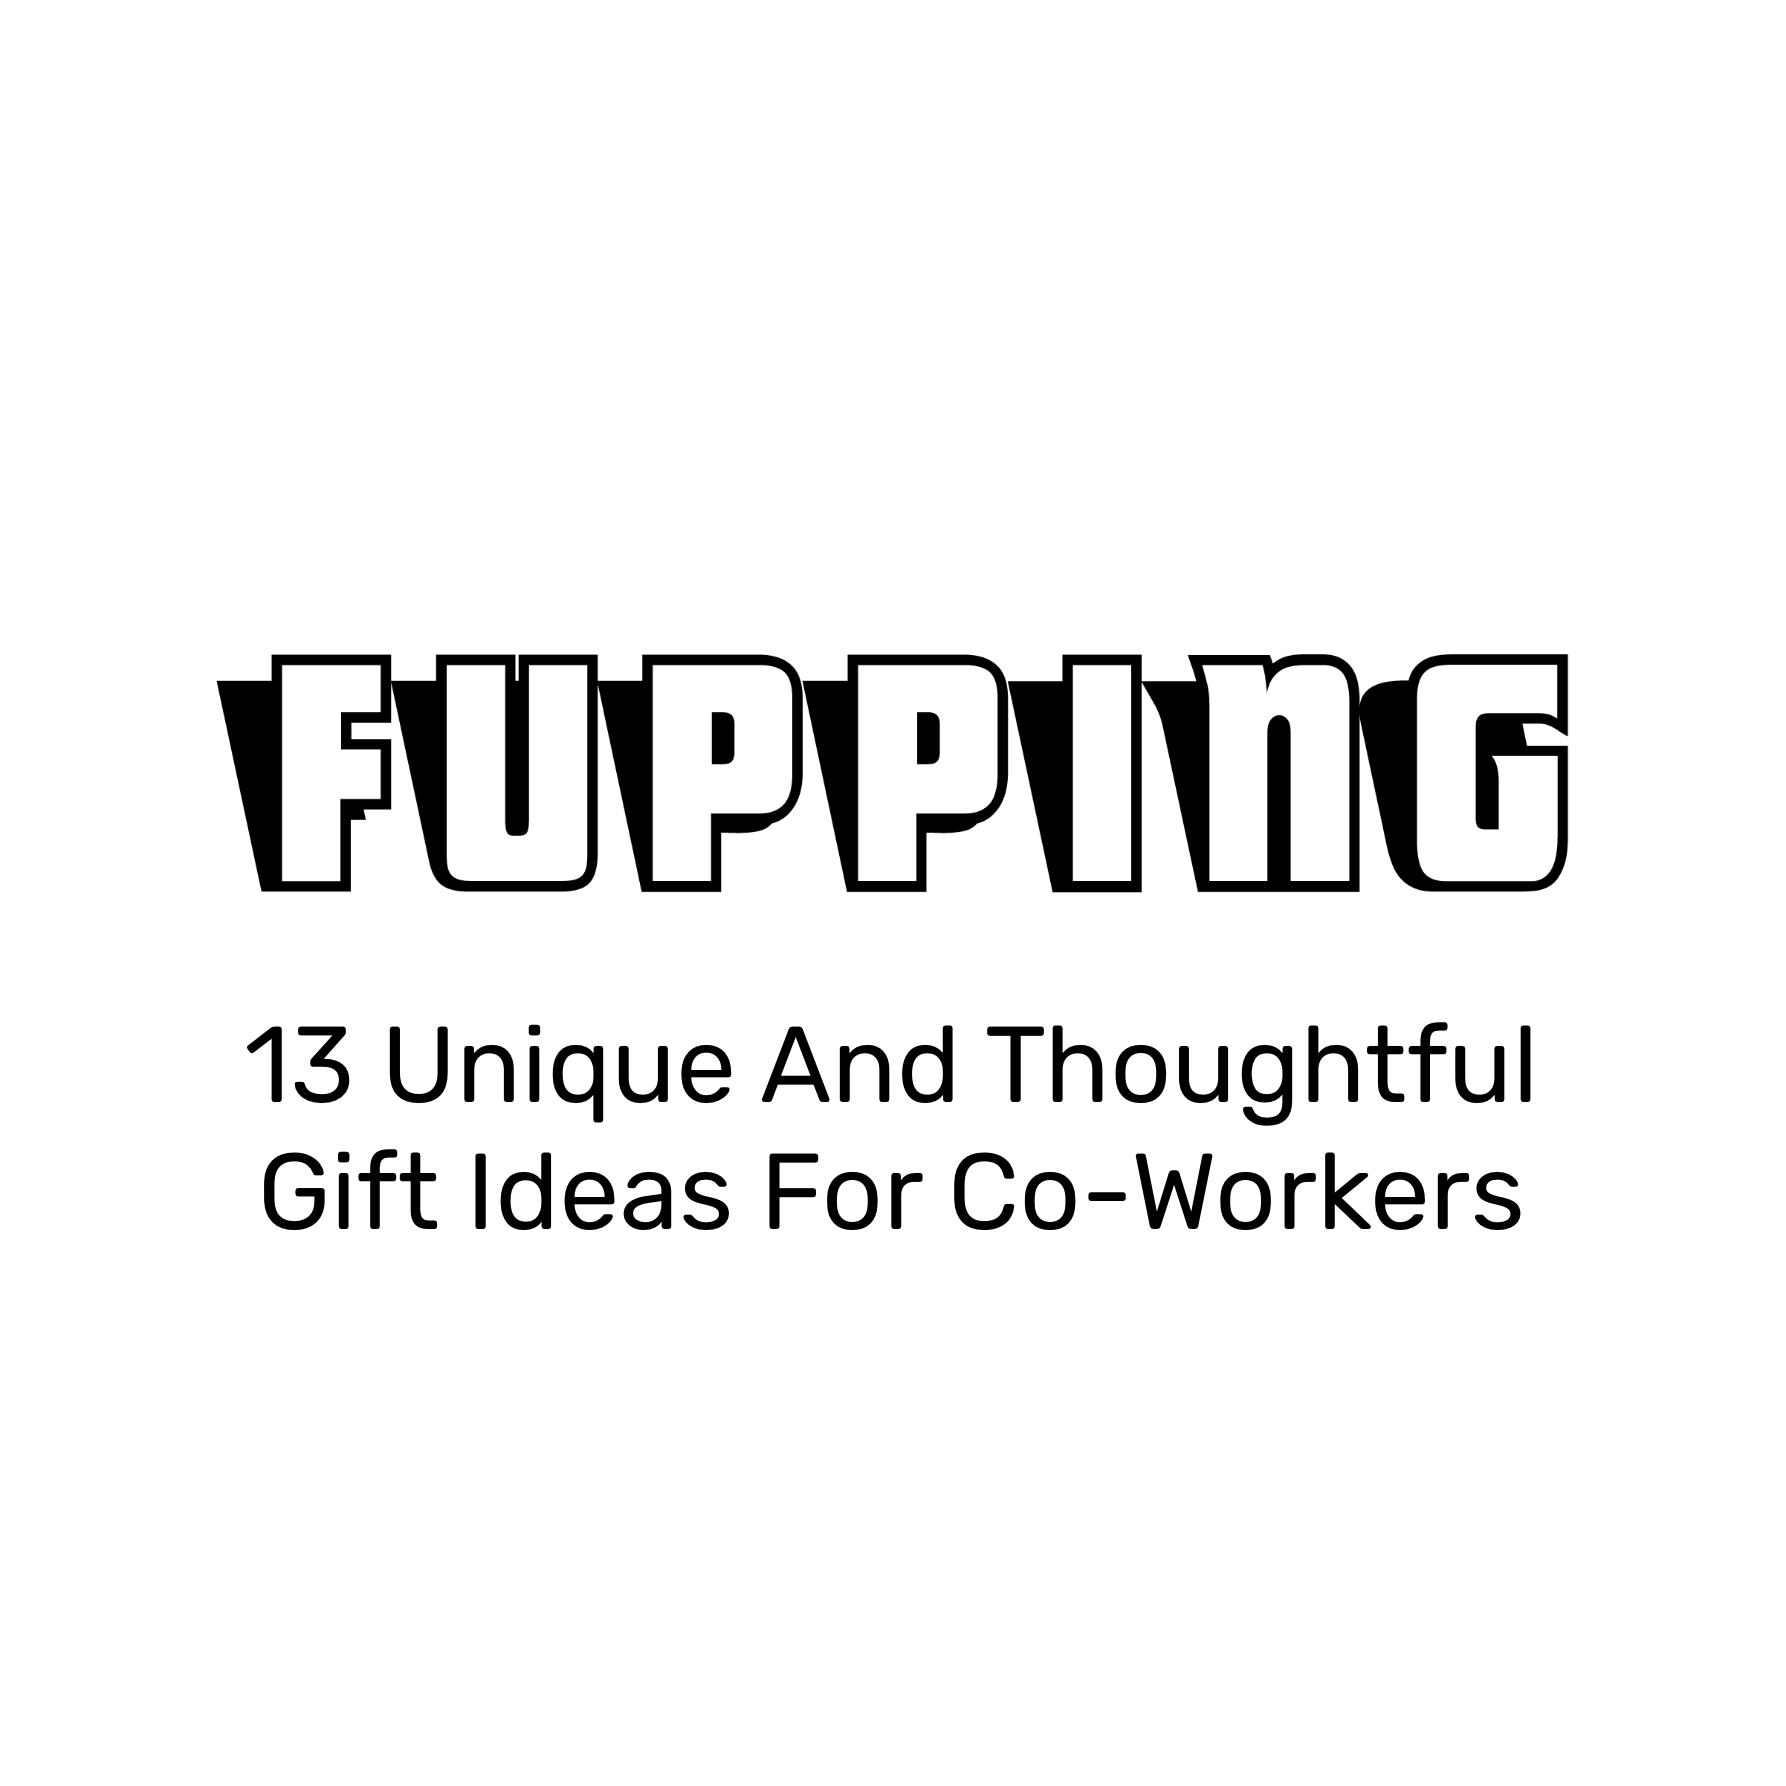 Fupping.com